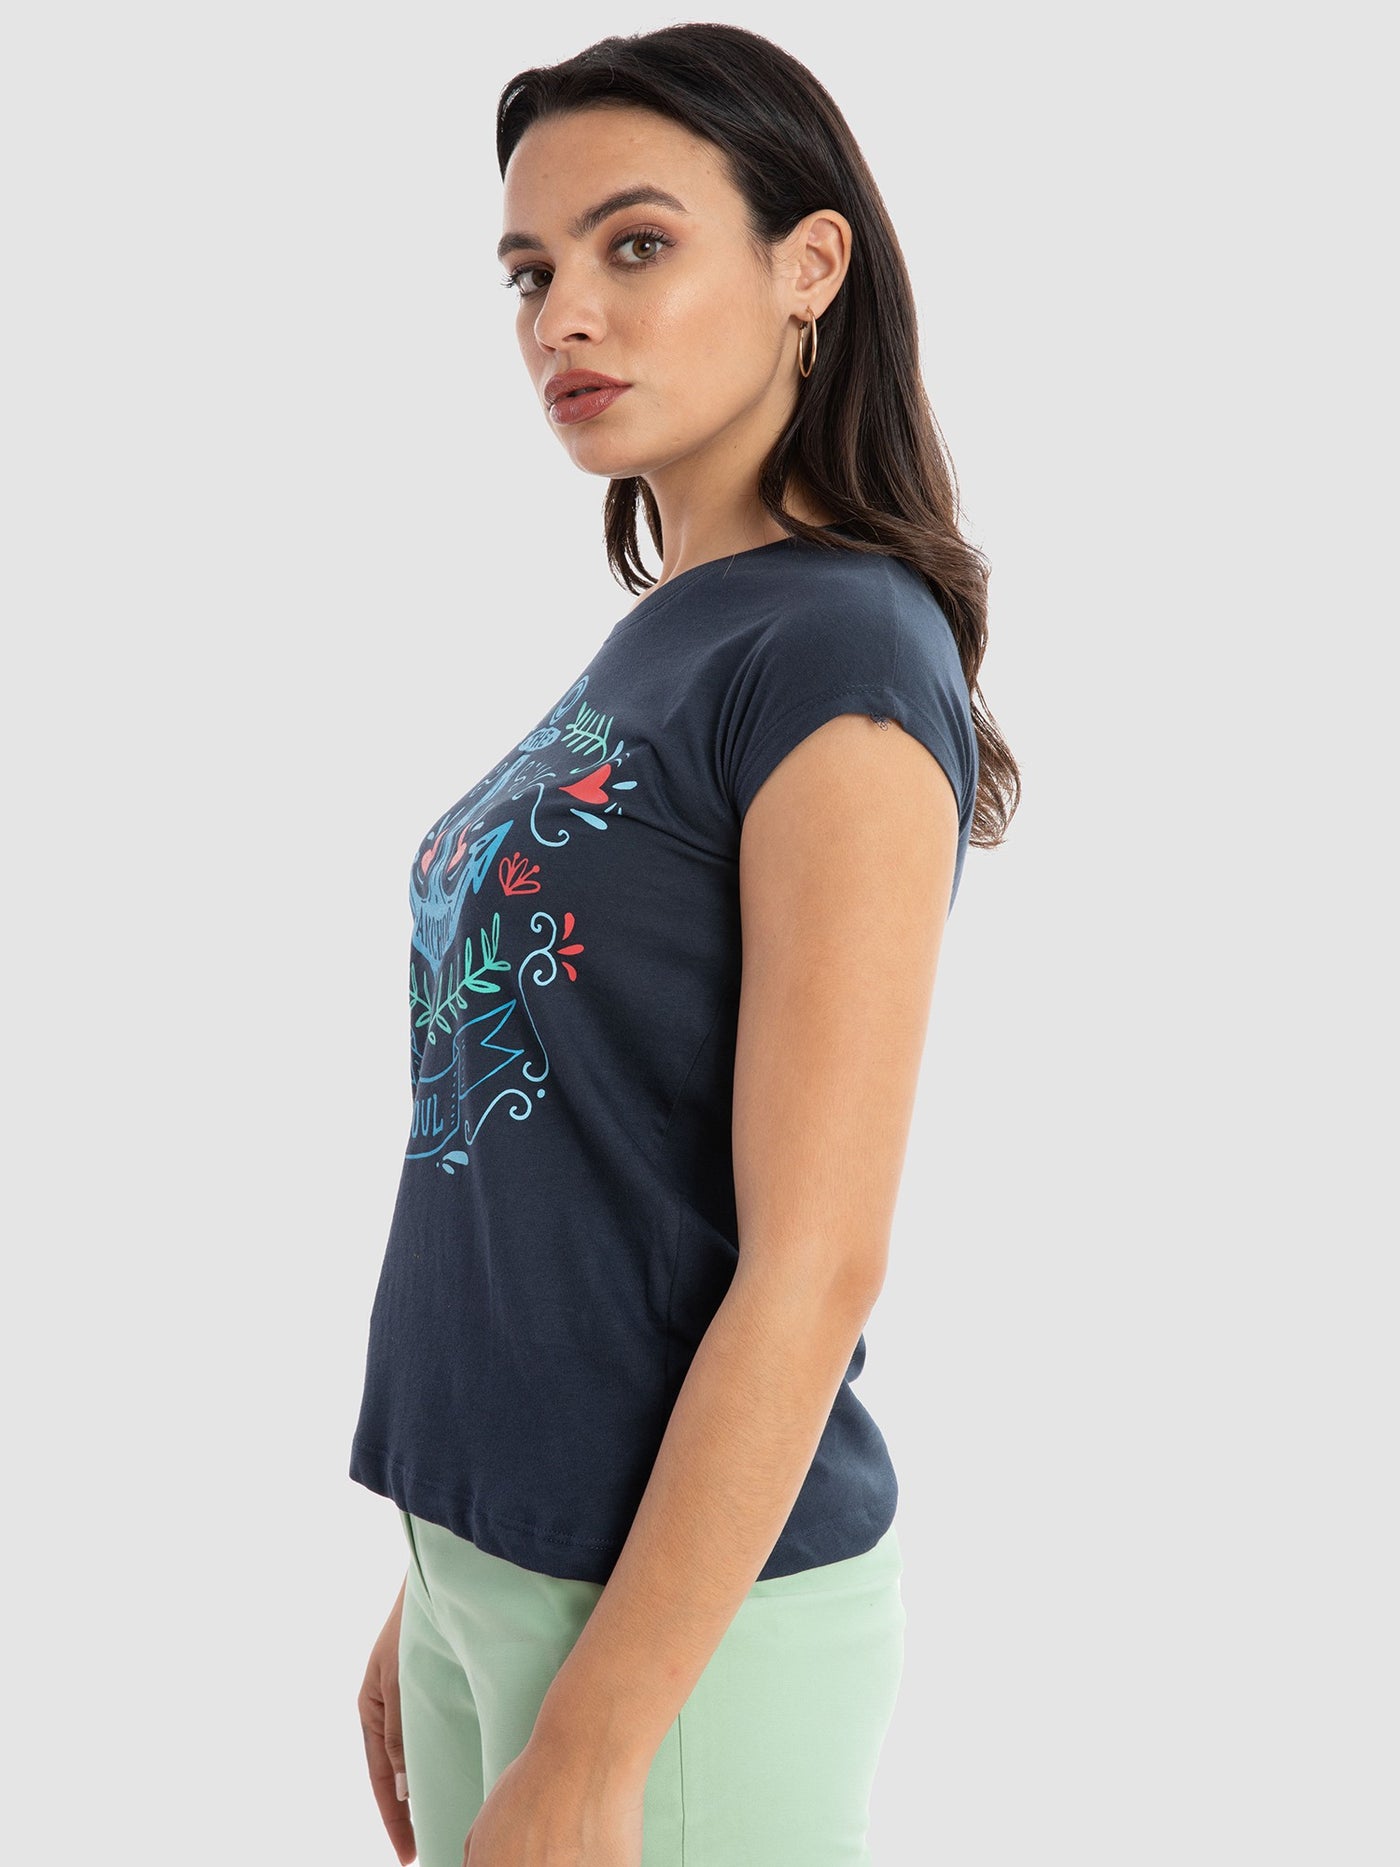 Premoda Womens Cap Sleeves T-Shirt